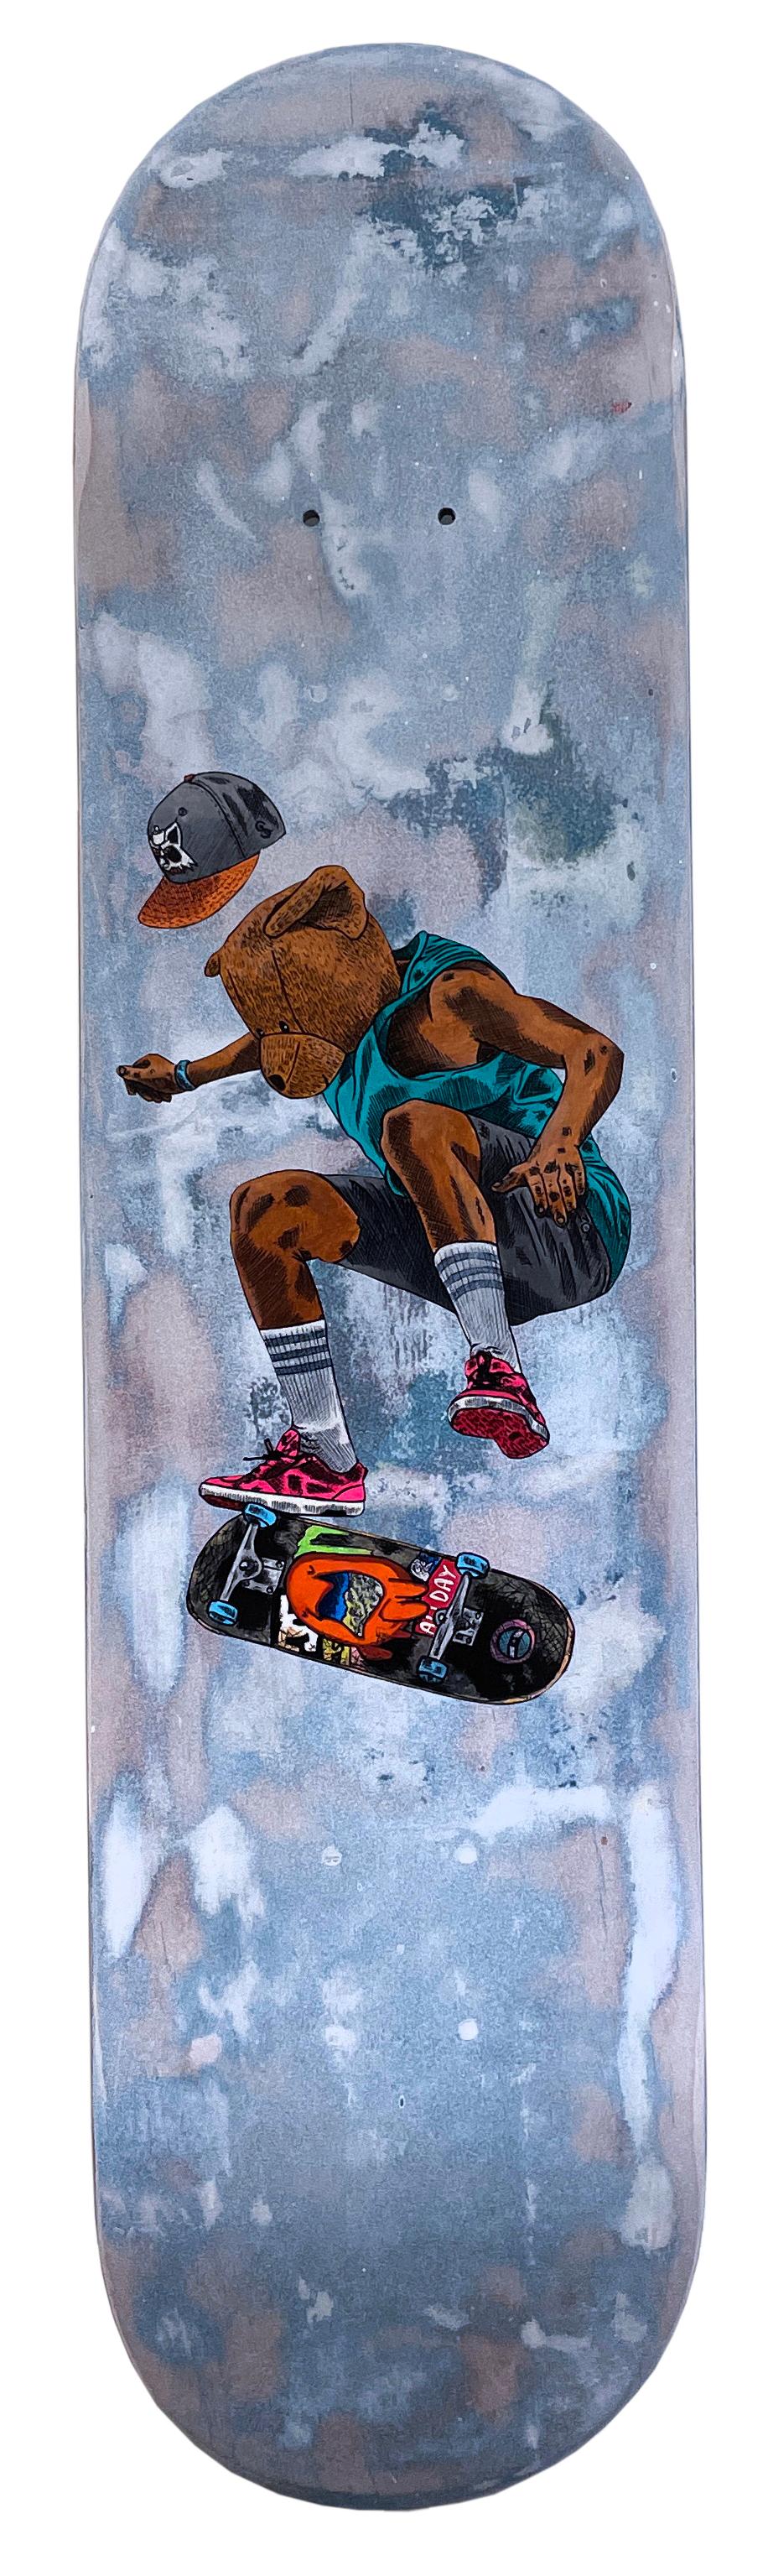 Laser Flip, 2020, graffiti urban mixed media wheatpaste skateboard bear, skater